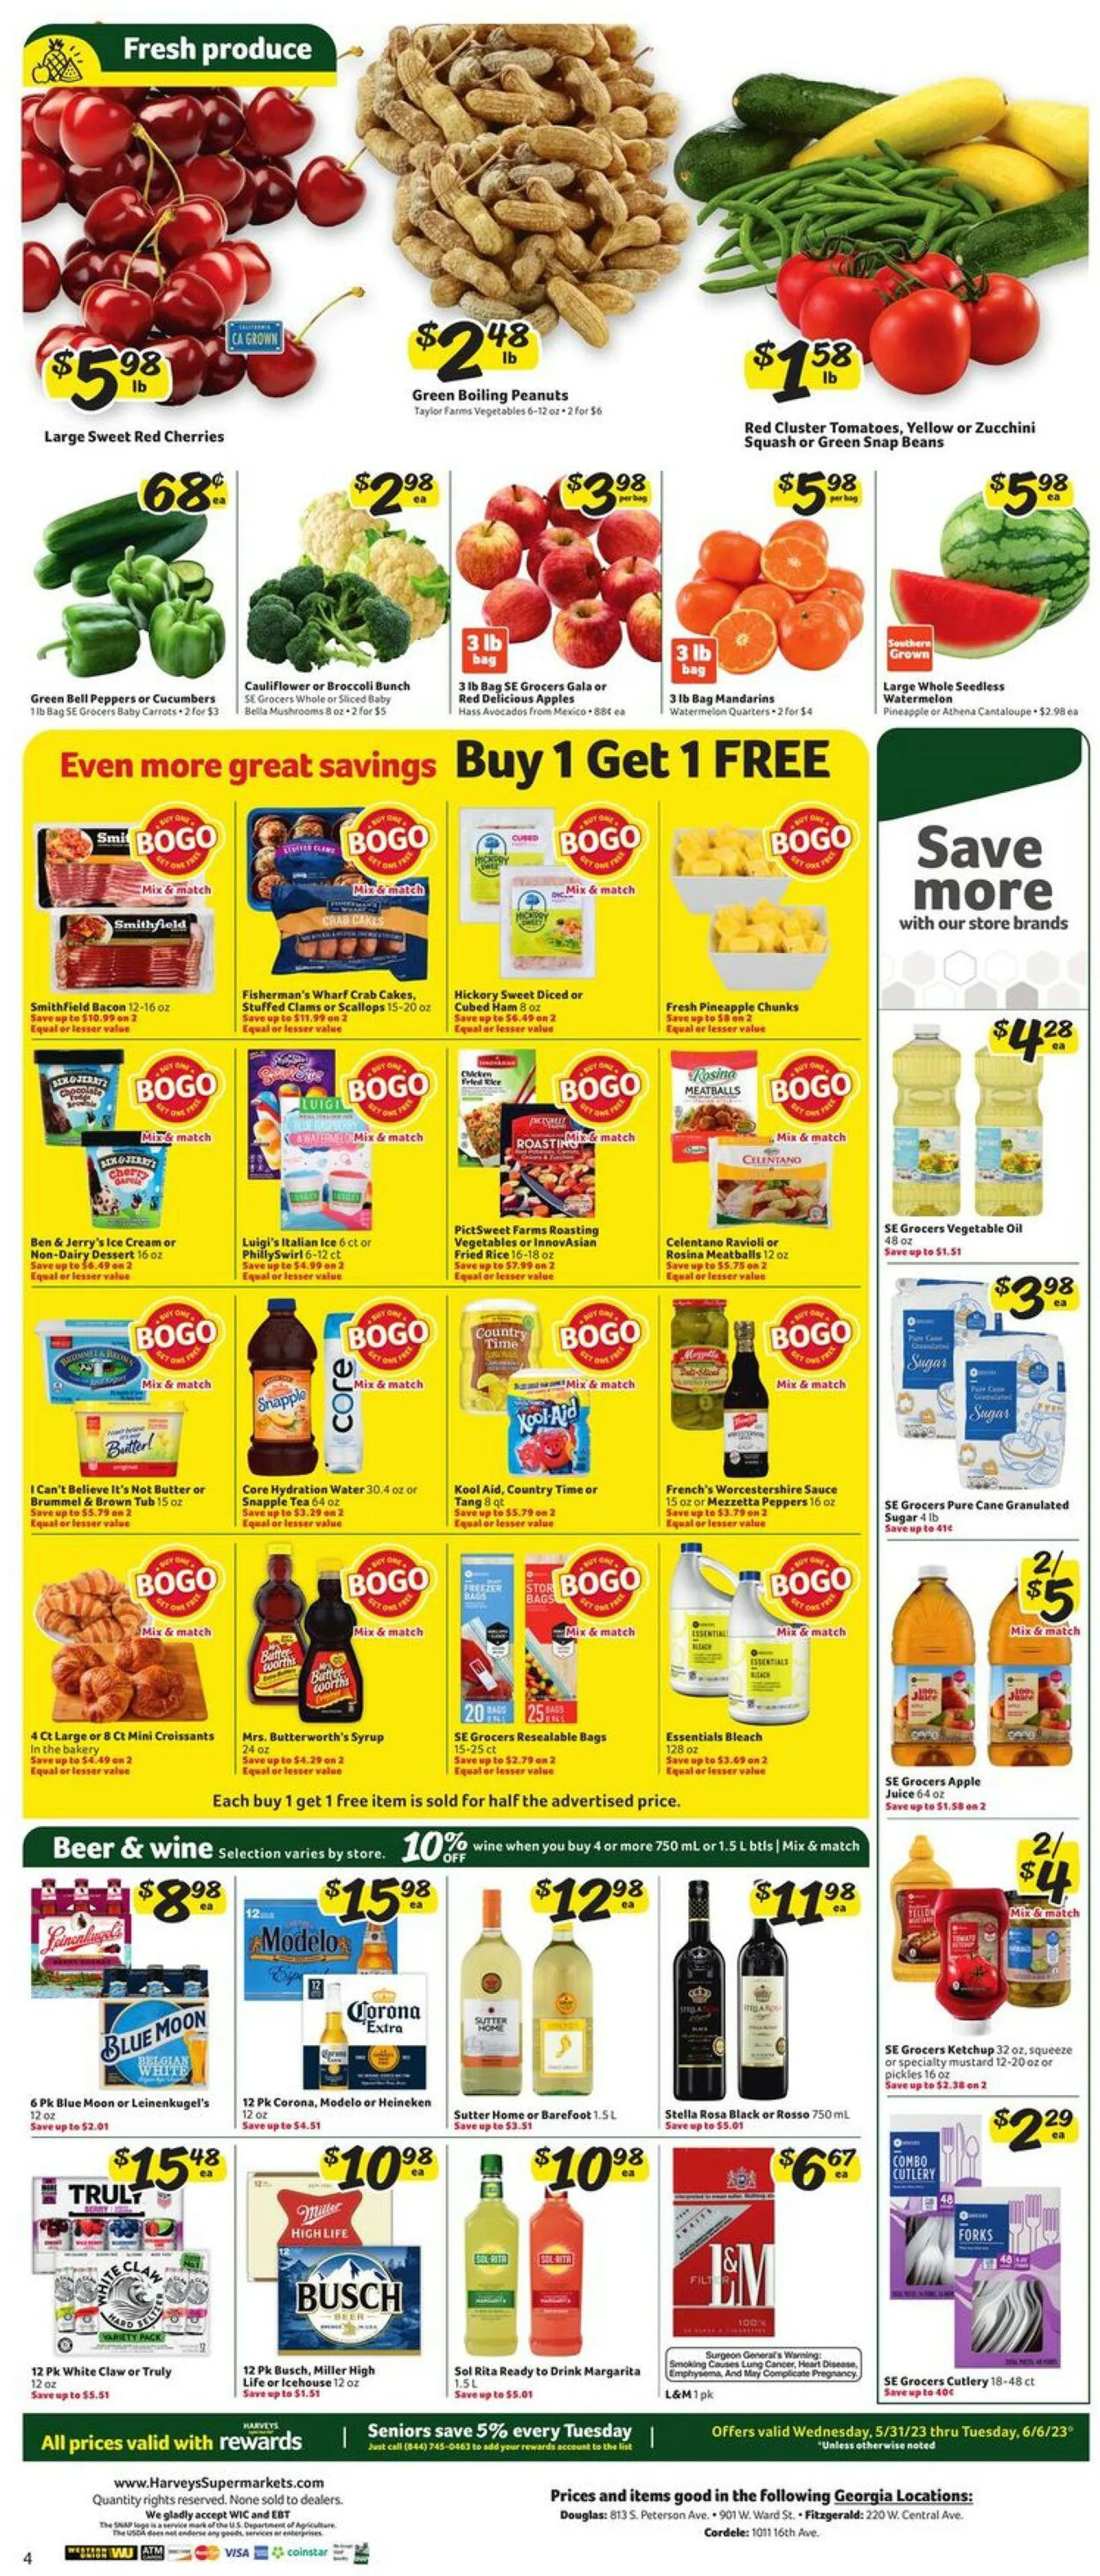 Harveys Supermarket Current weekly ad - 8